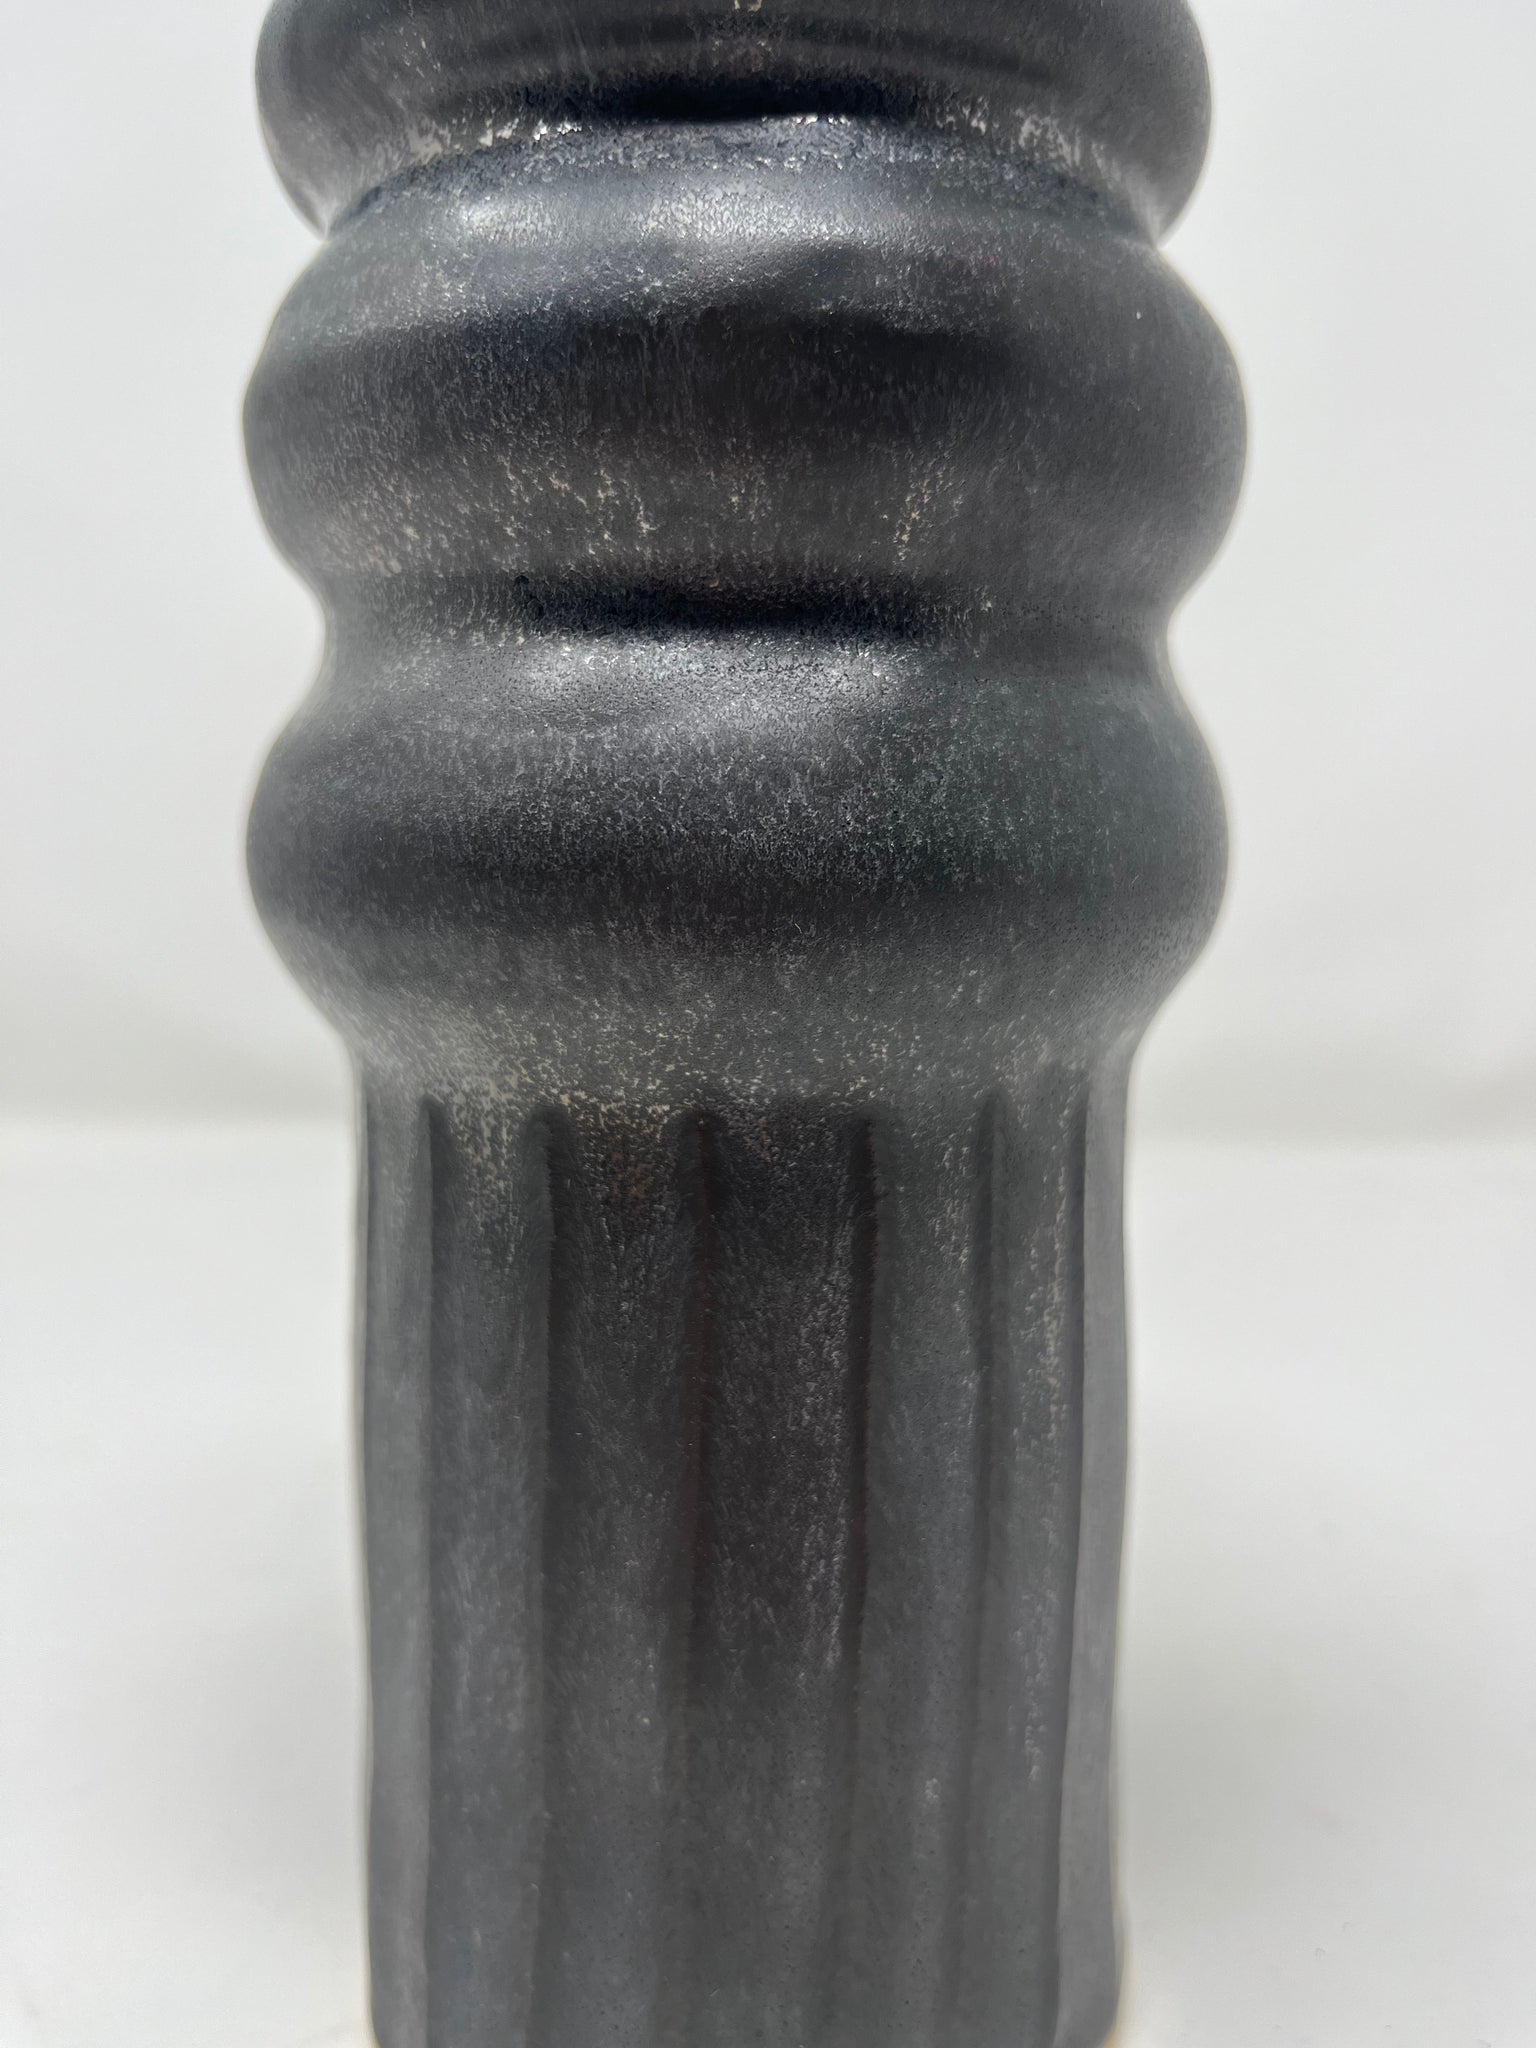 Black Bumpy Ribbed Vase